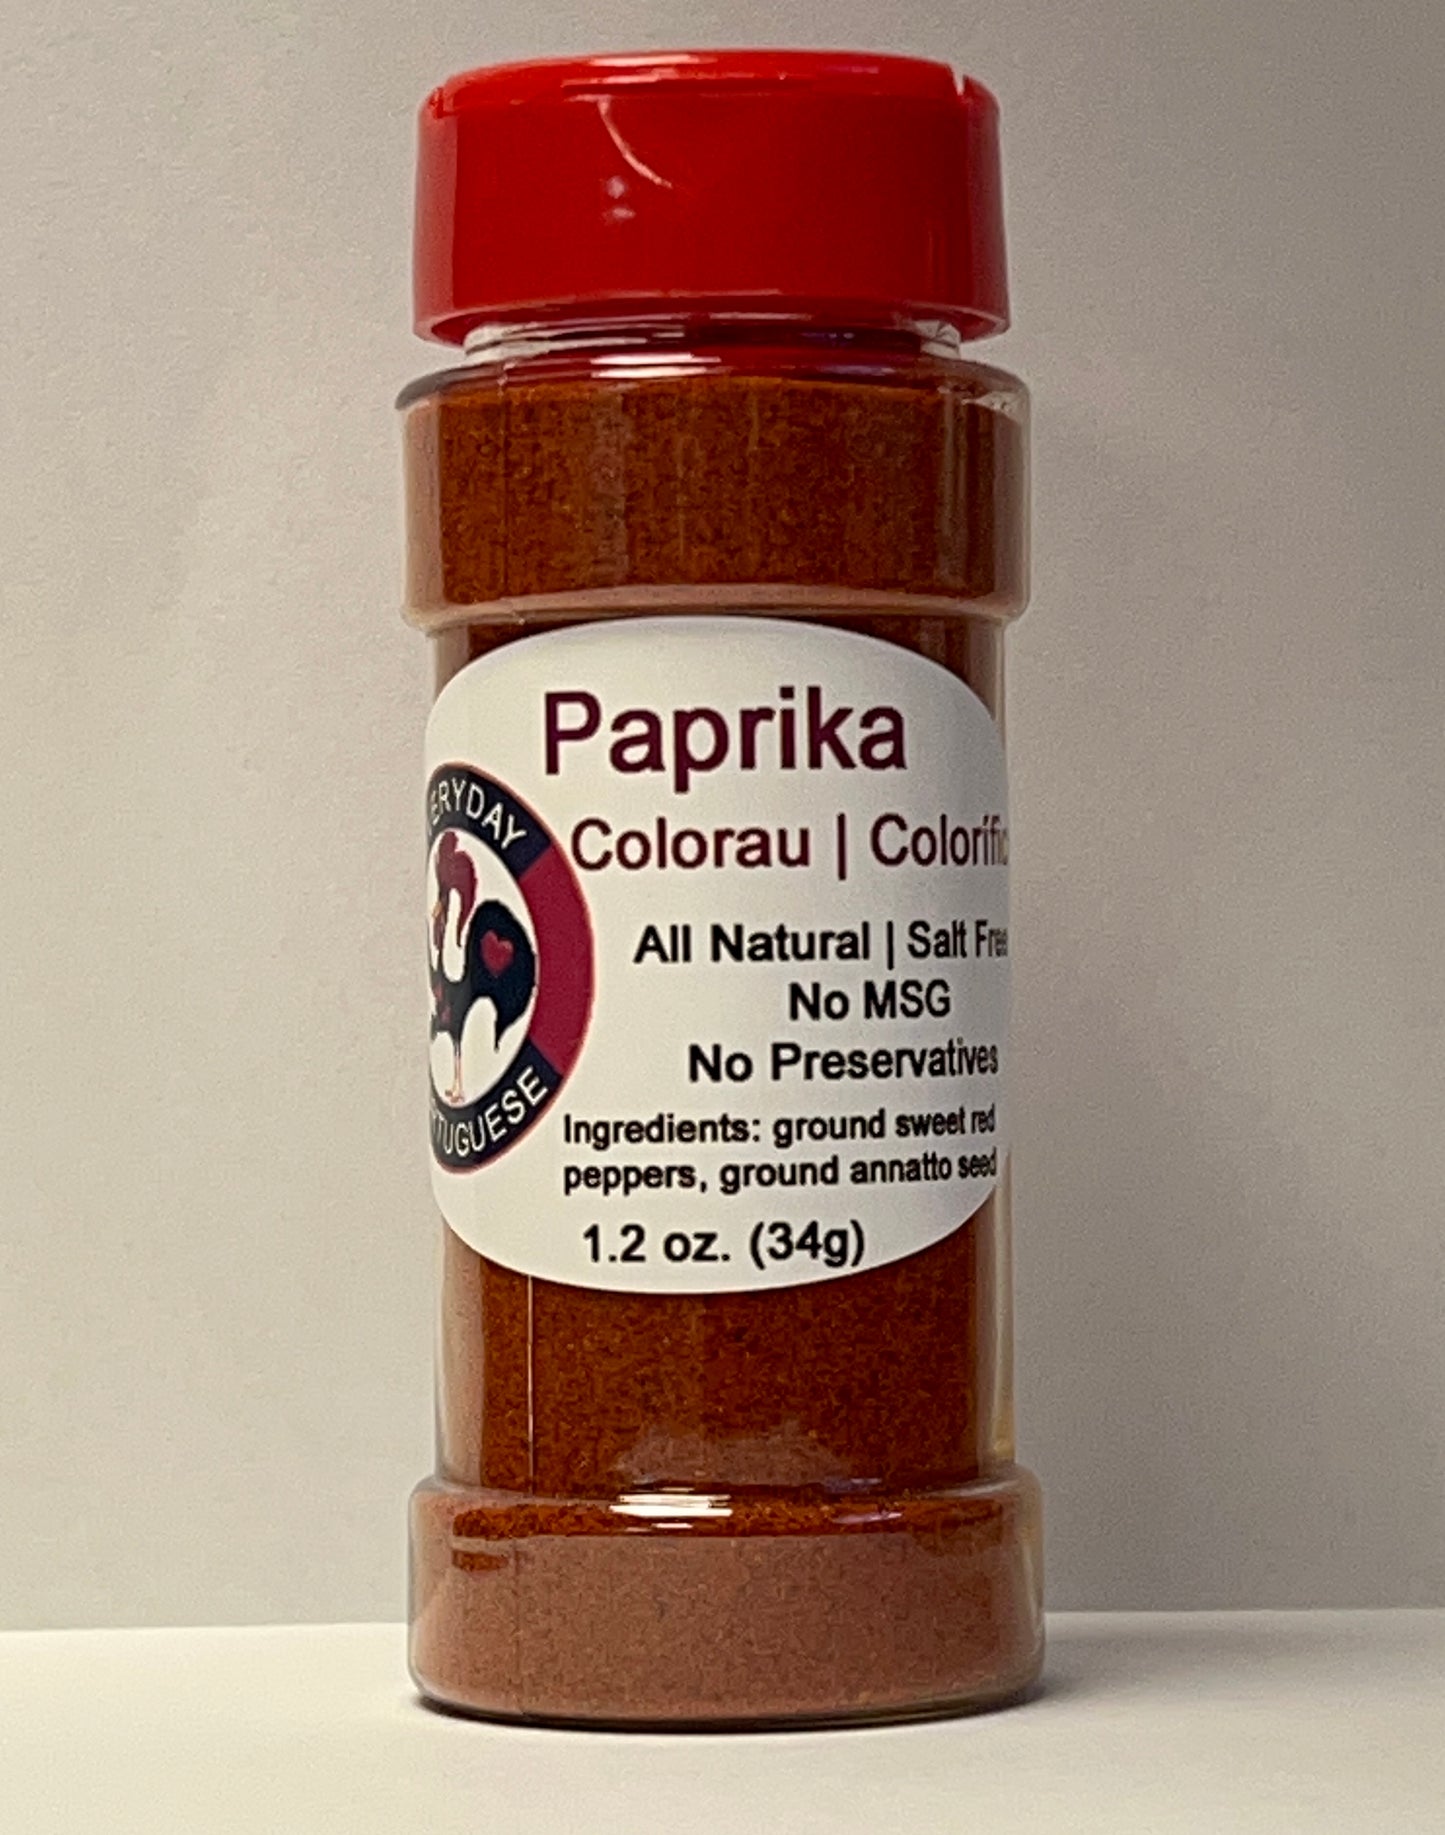 Portuguese Paprika Colorau | Colorifico